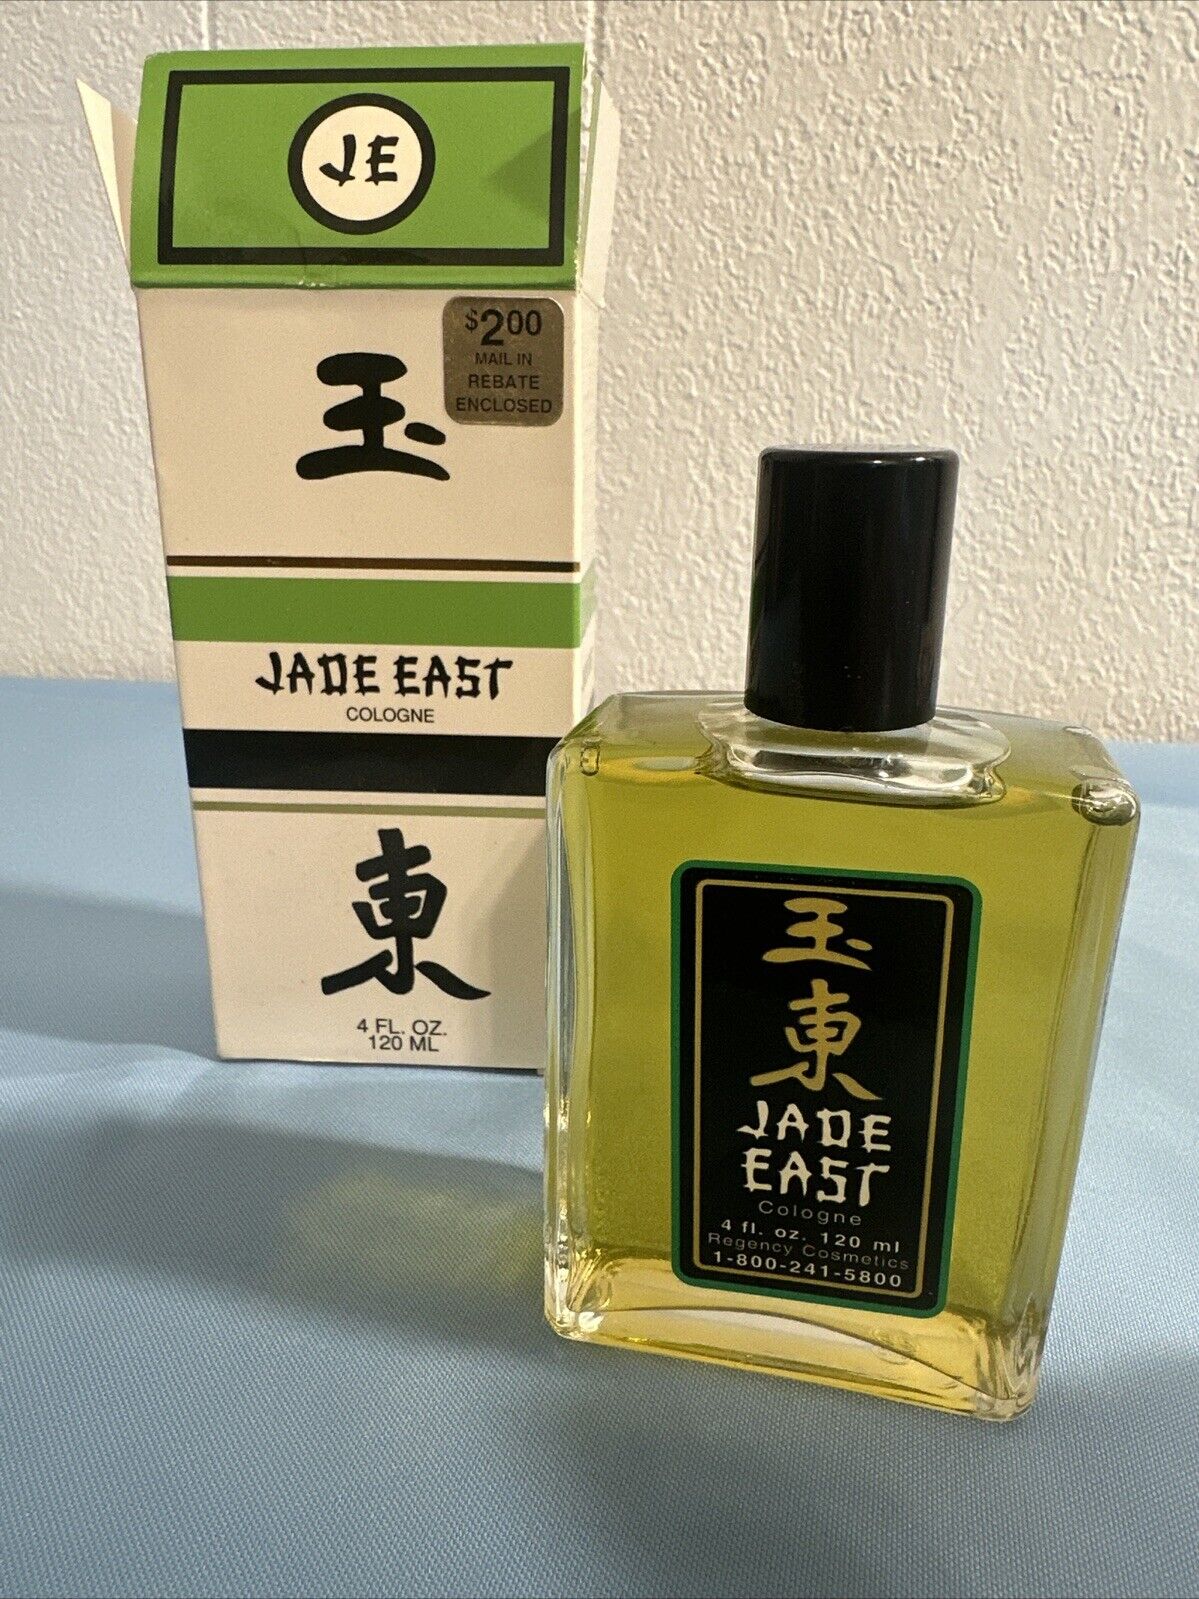 Jade East Cologne Splash 4.0 FL OZ. Regency Cosmetics Vintage - New With Box